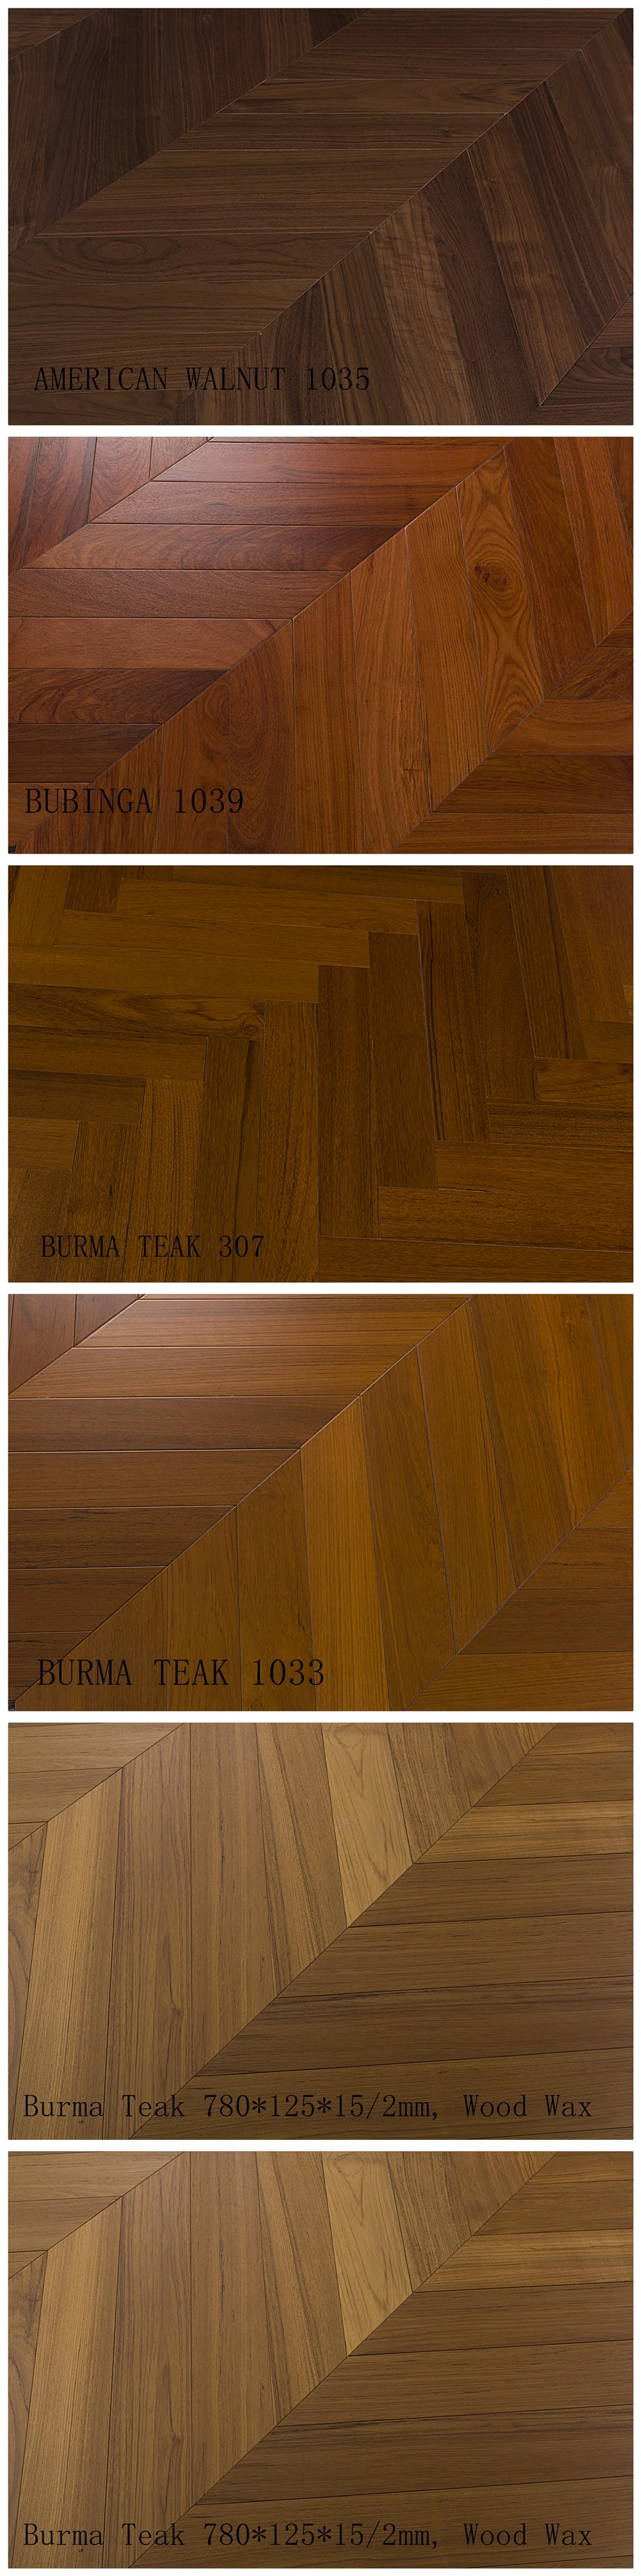 Engineered Wood Flooring/Birch Species/Timber Flooring/Hardwood Flooring/ Flooring Tile/Chevron Design